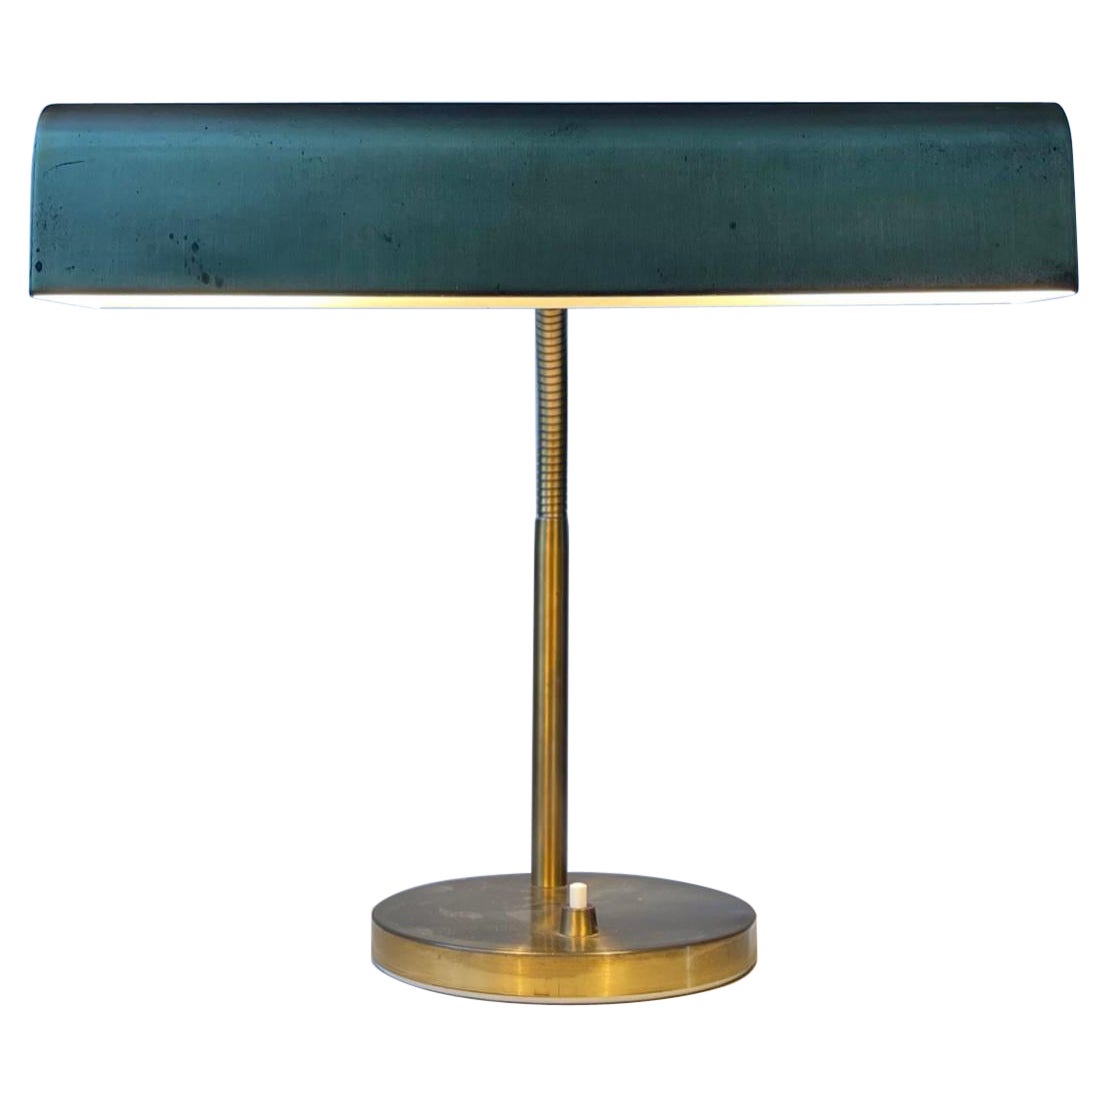 Scandinavian Midcentury Bankers Desk Lamp in Brass from E. S. Horn, 1950s